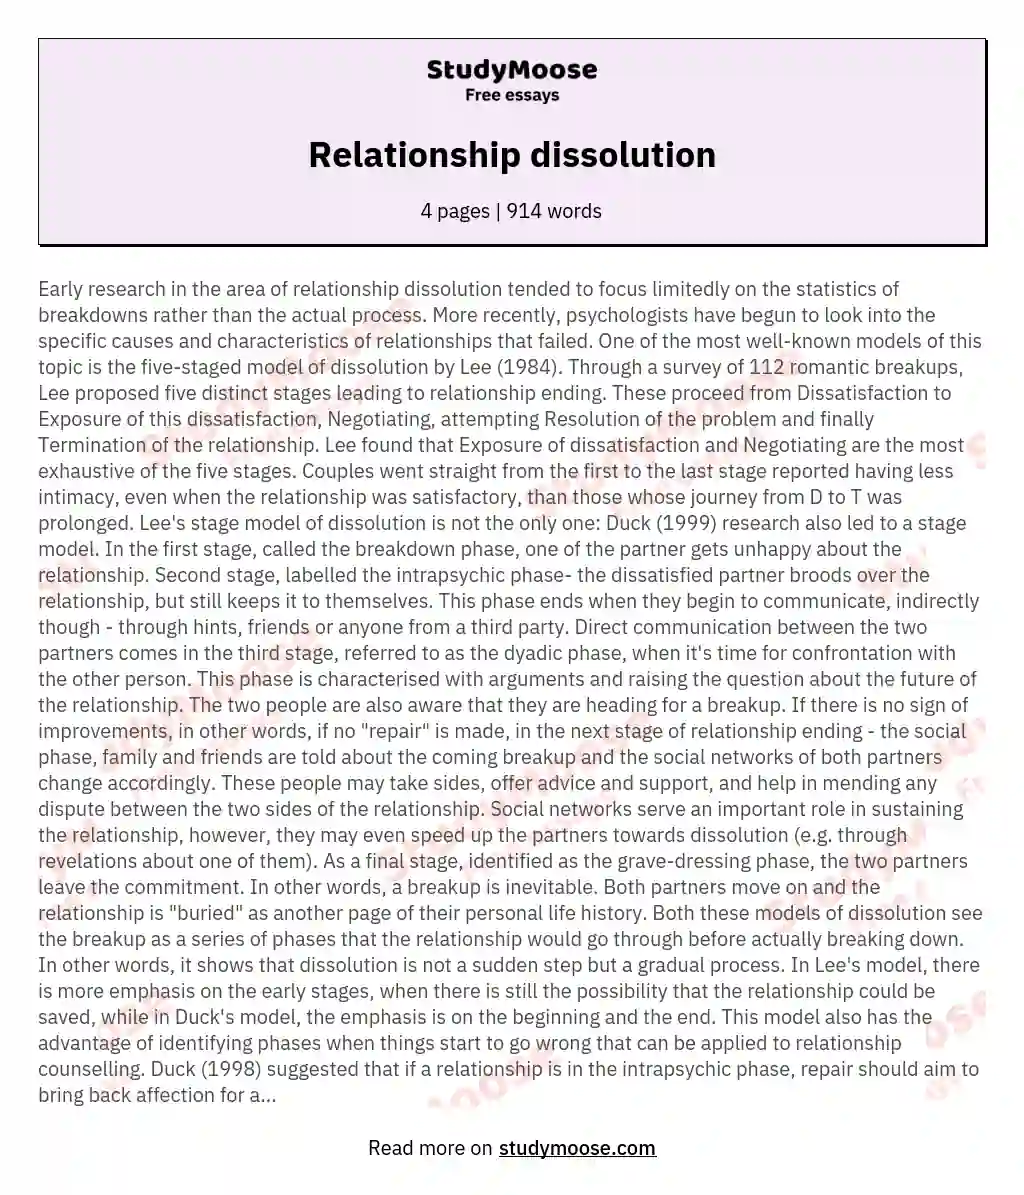 Relationship dissolution essay